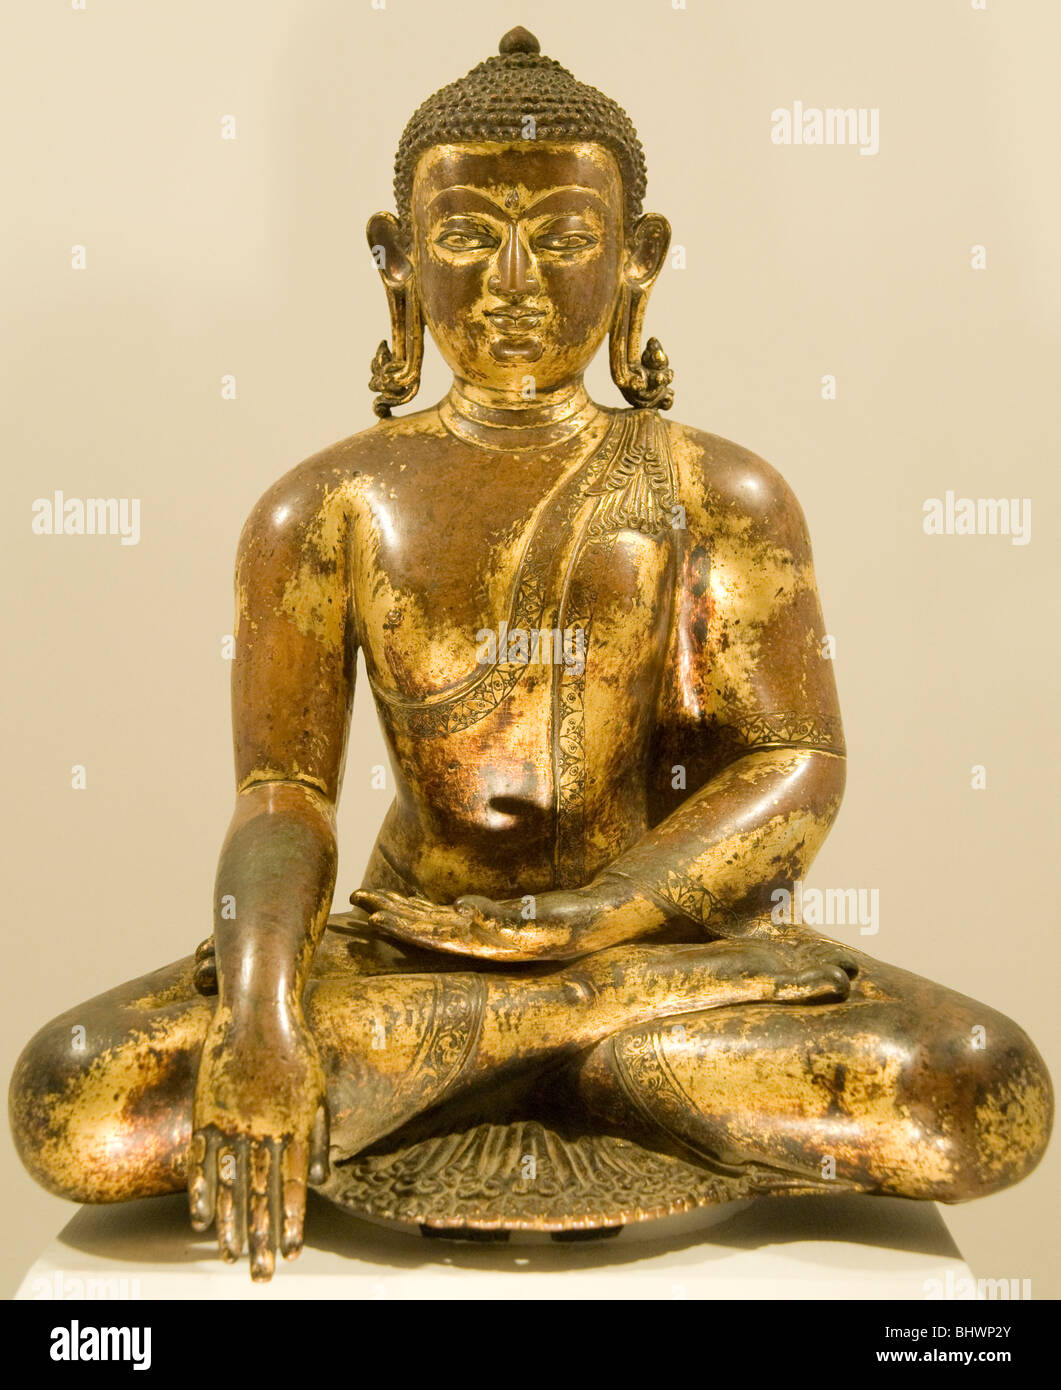 Shakyamuni, der historische Buddha nepalesischen 12 Jahrhundert Statue in Patan Museum am Durbar Square, Kathmandu, Nepal Stockfoto